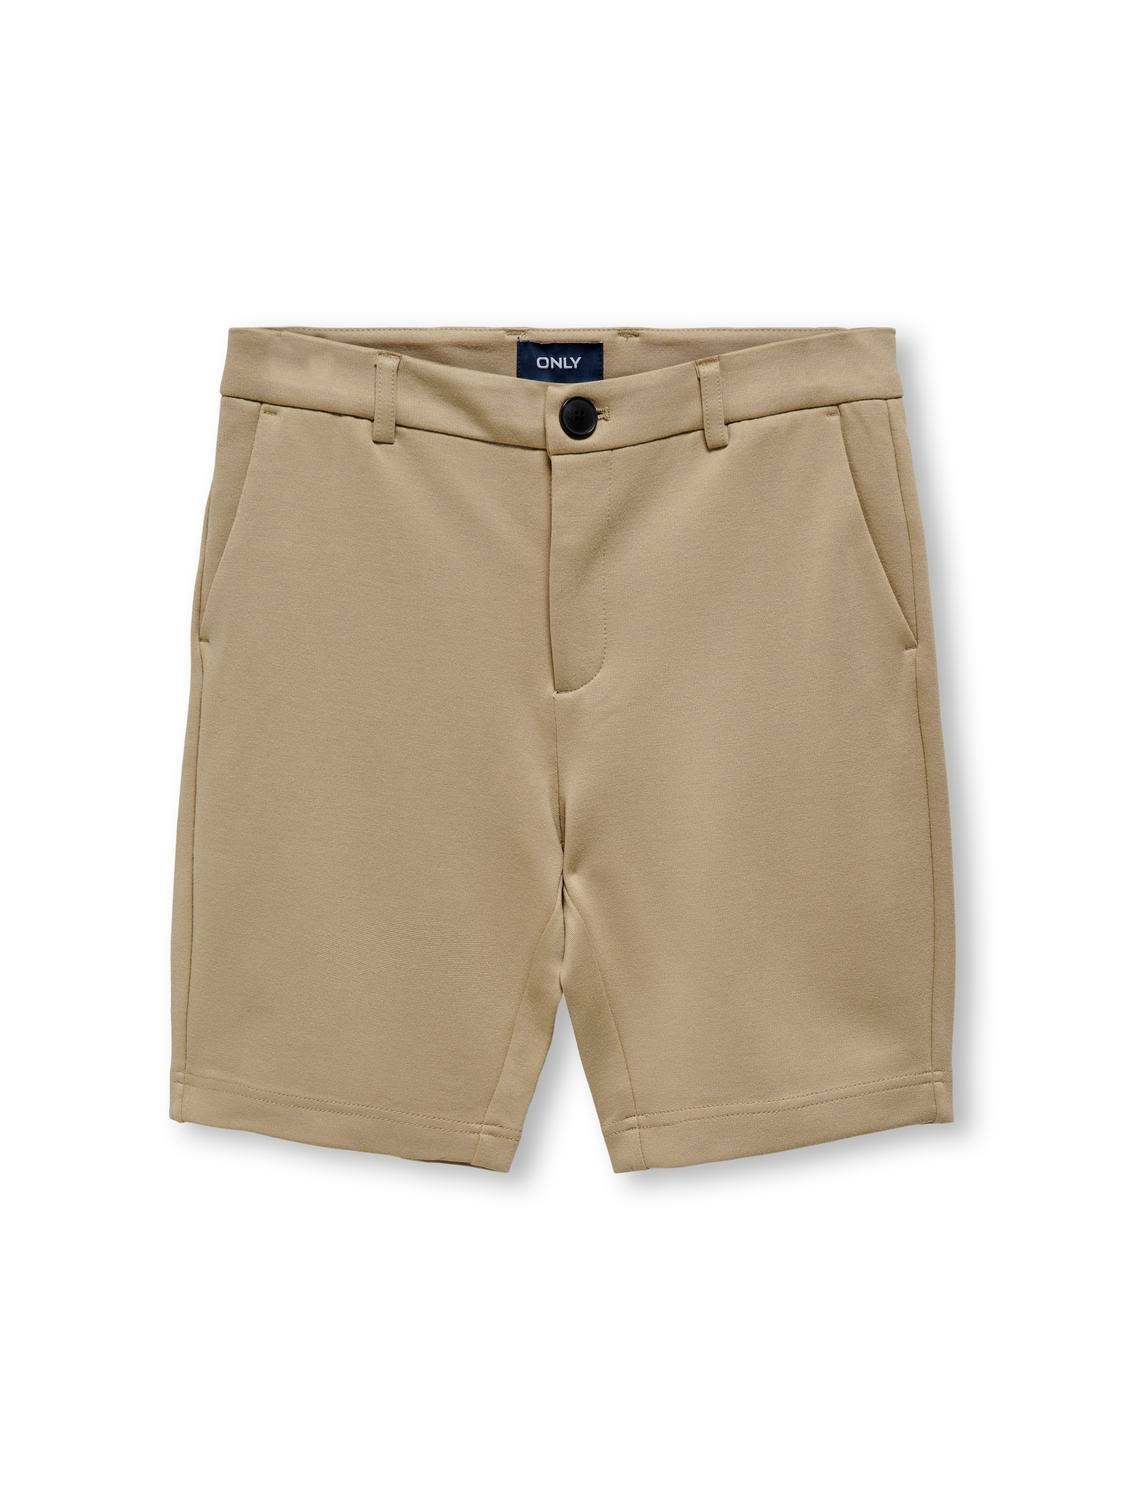 ONLY Shorts Regular Fit -Irish Cream - 15300569